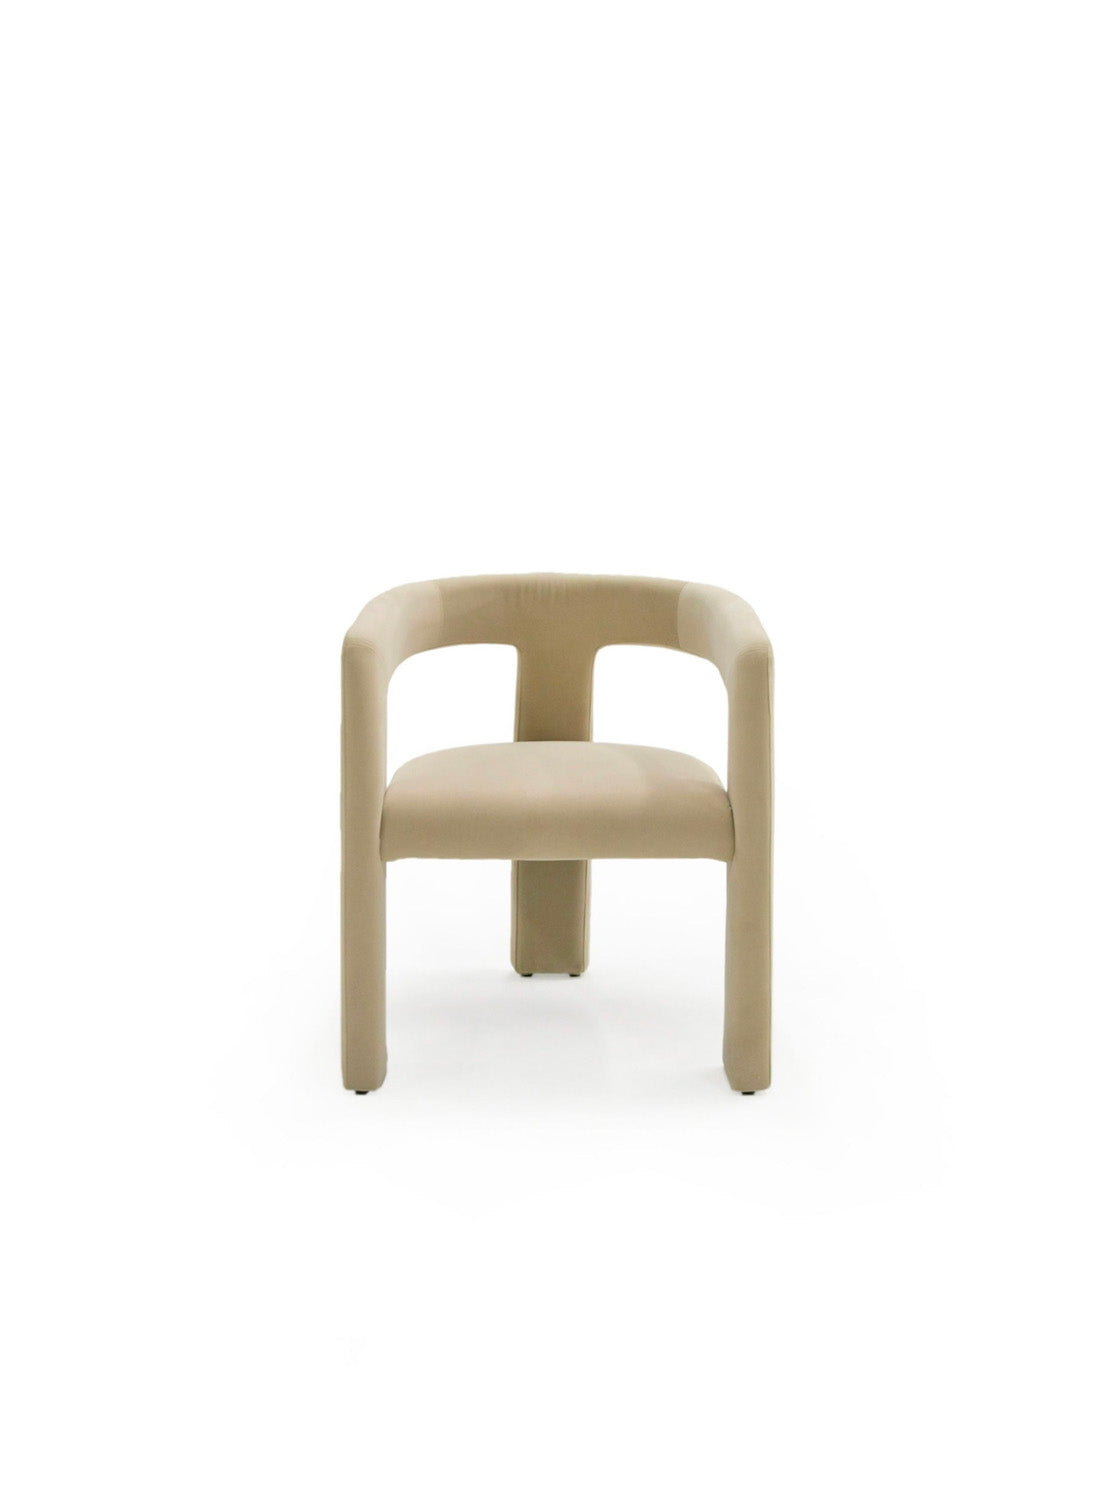 Lennon Dining Chair, beige